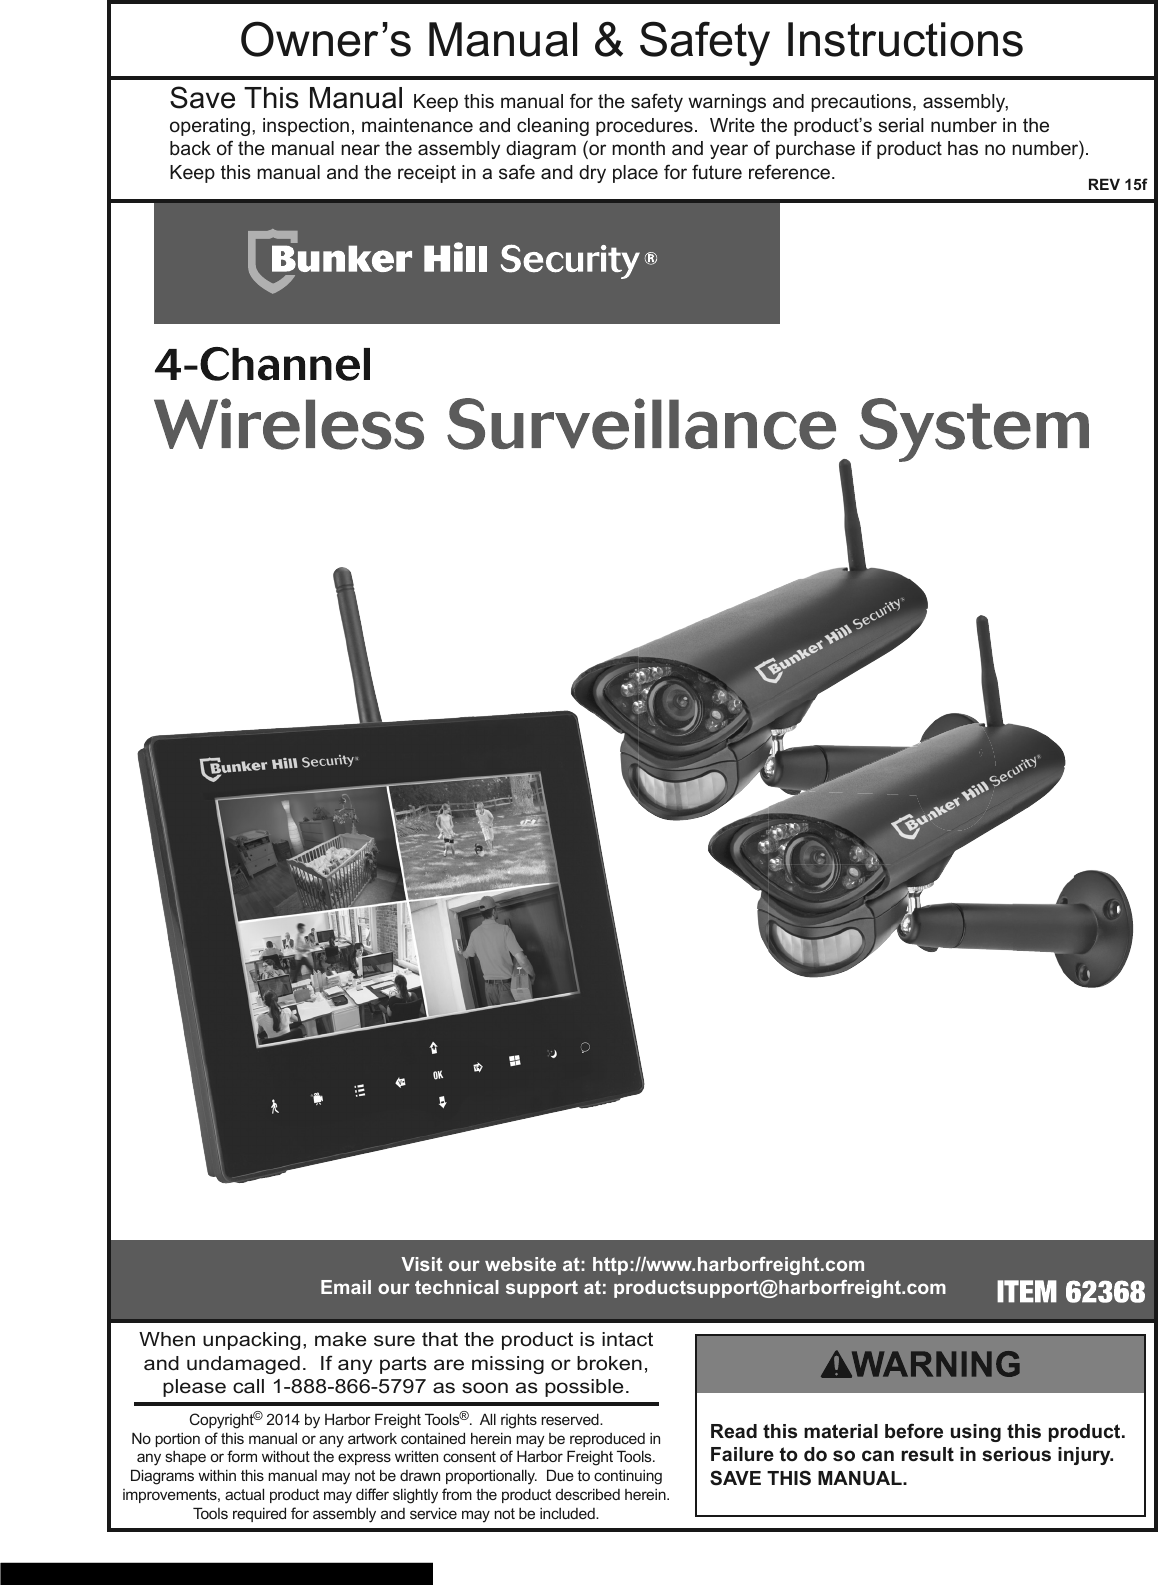 bunker hill security wireless camera rf detector manual